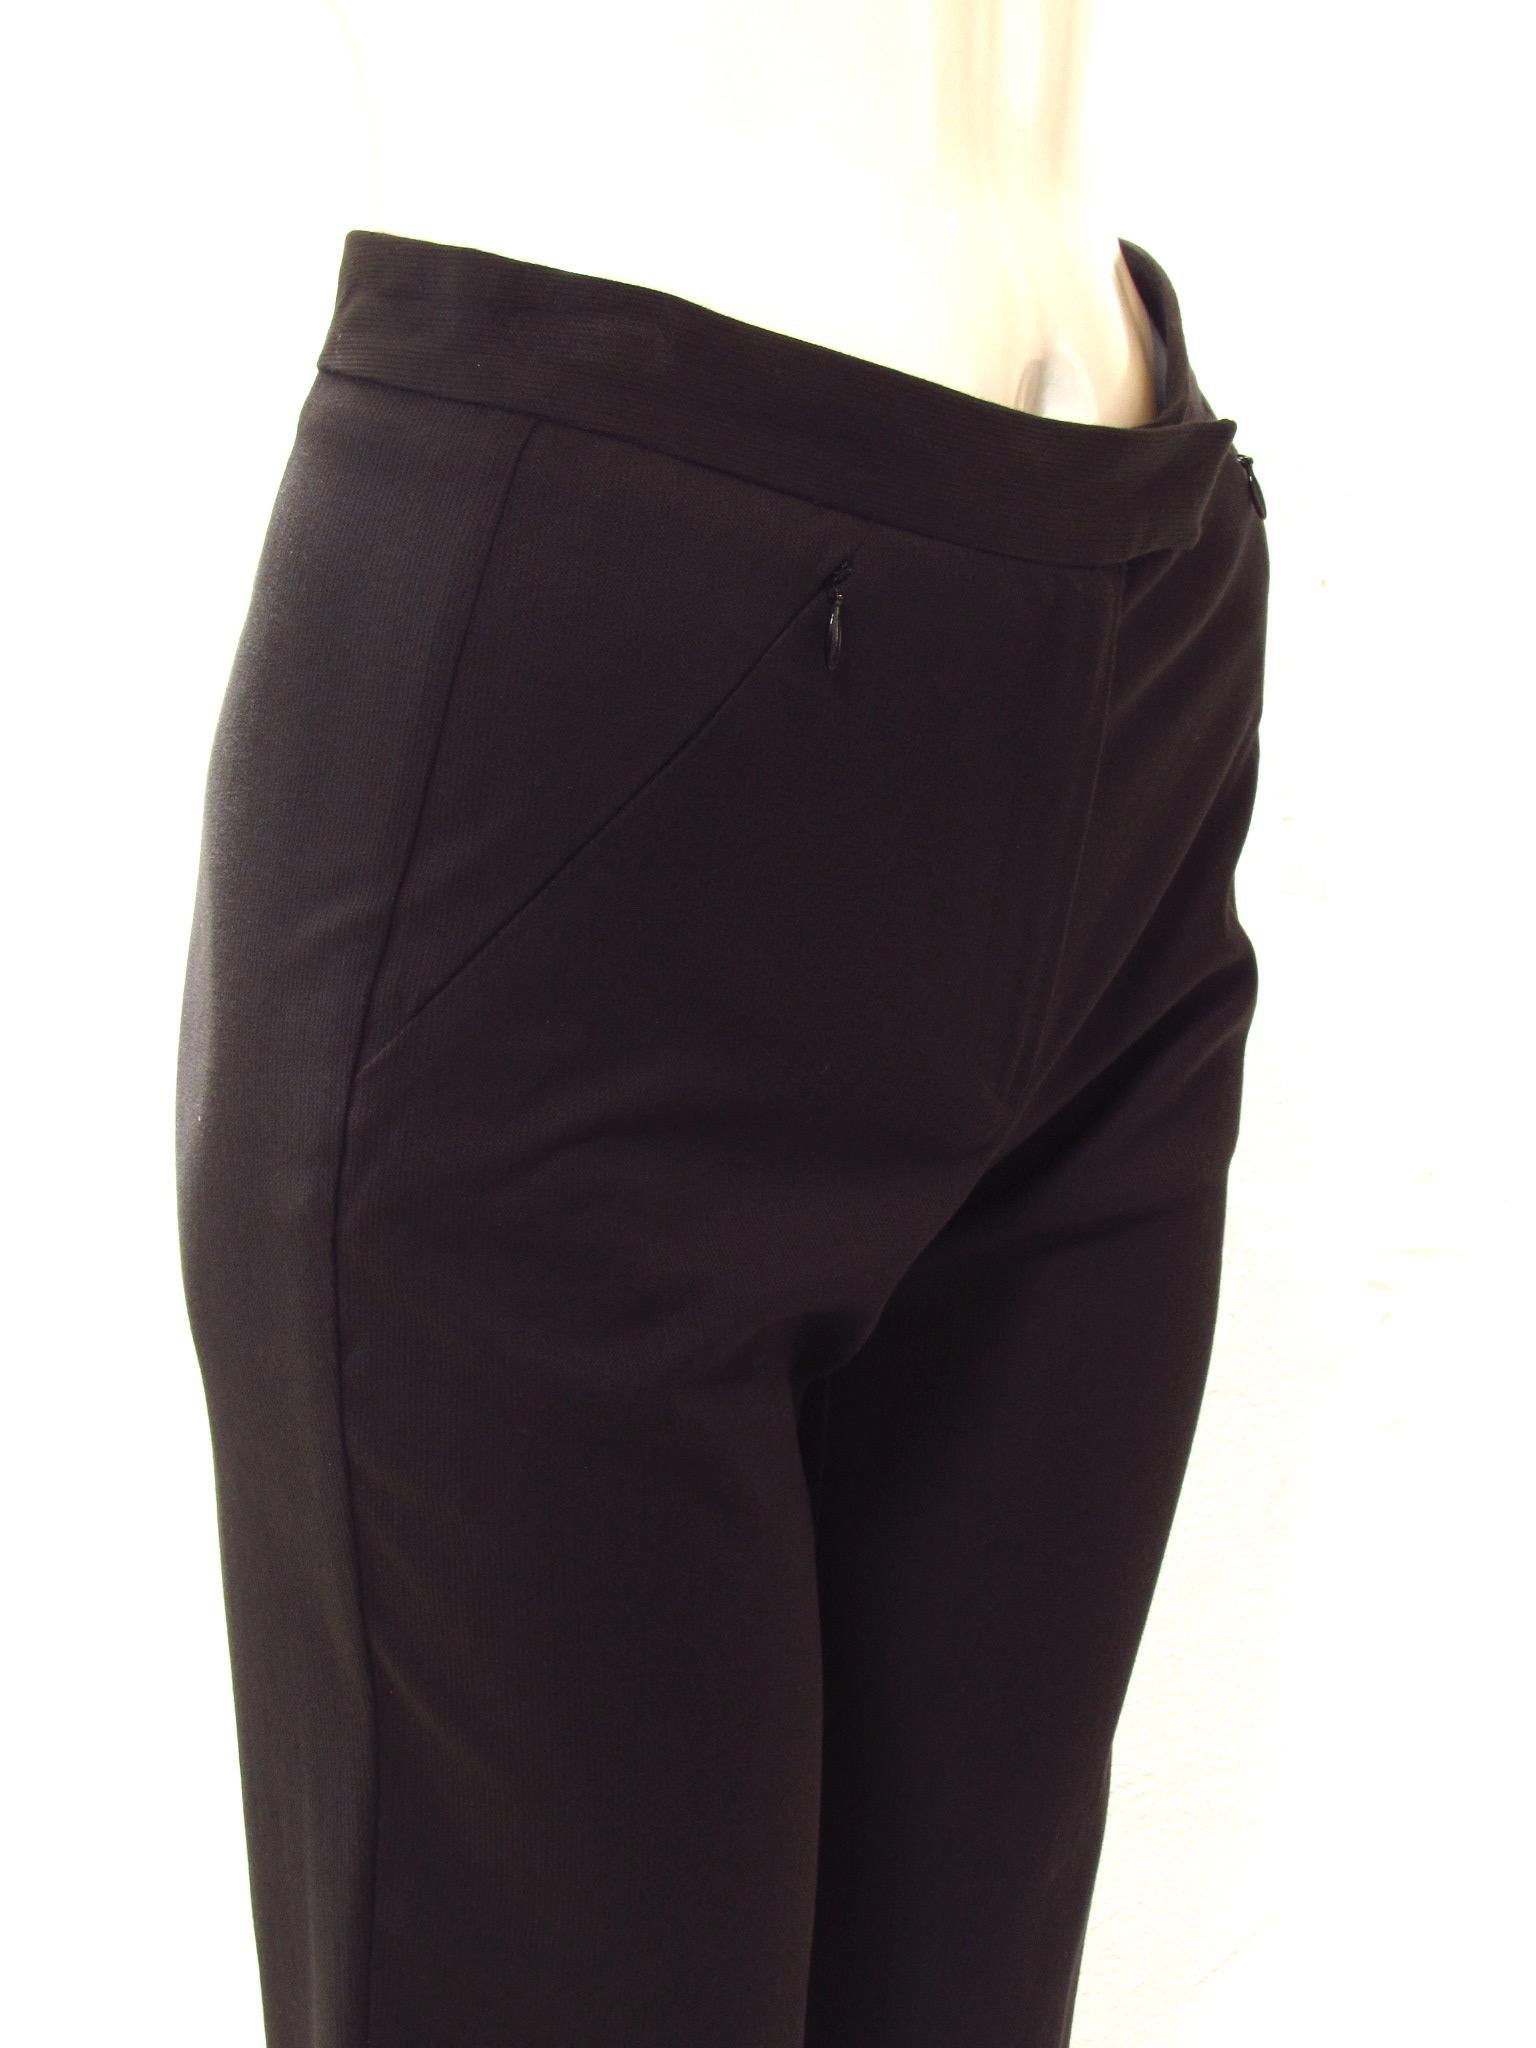 Maison Martin Margiela Straight Black Pant In New Condition For Sale In Laguna Beach, CA